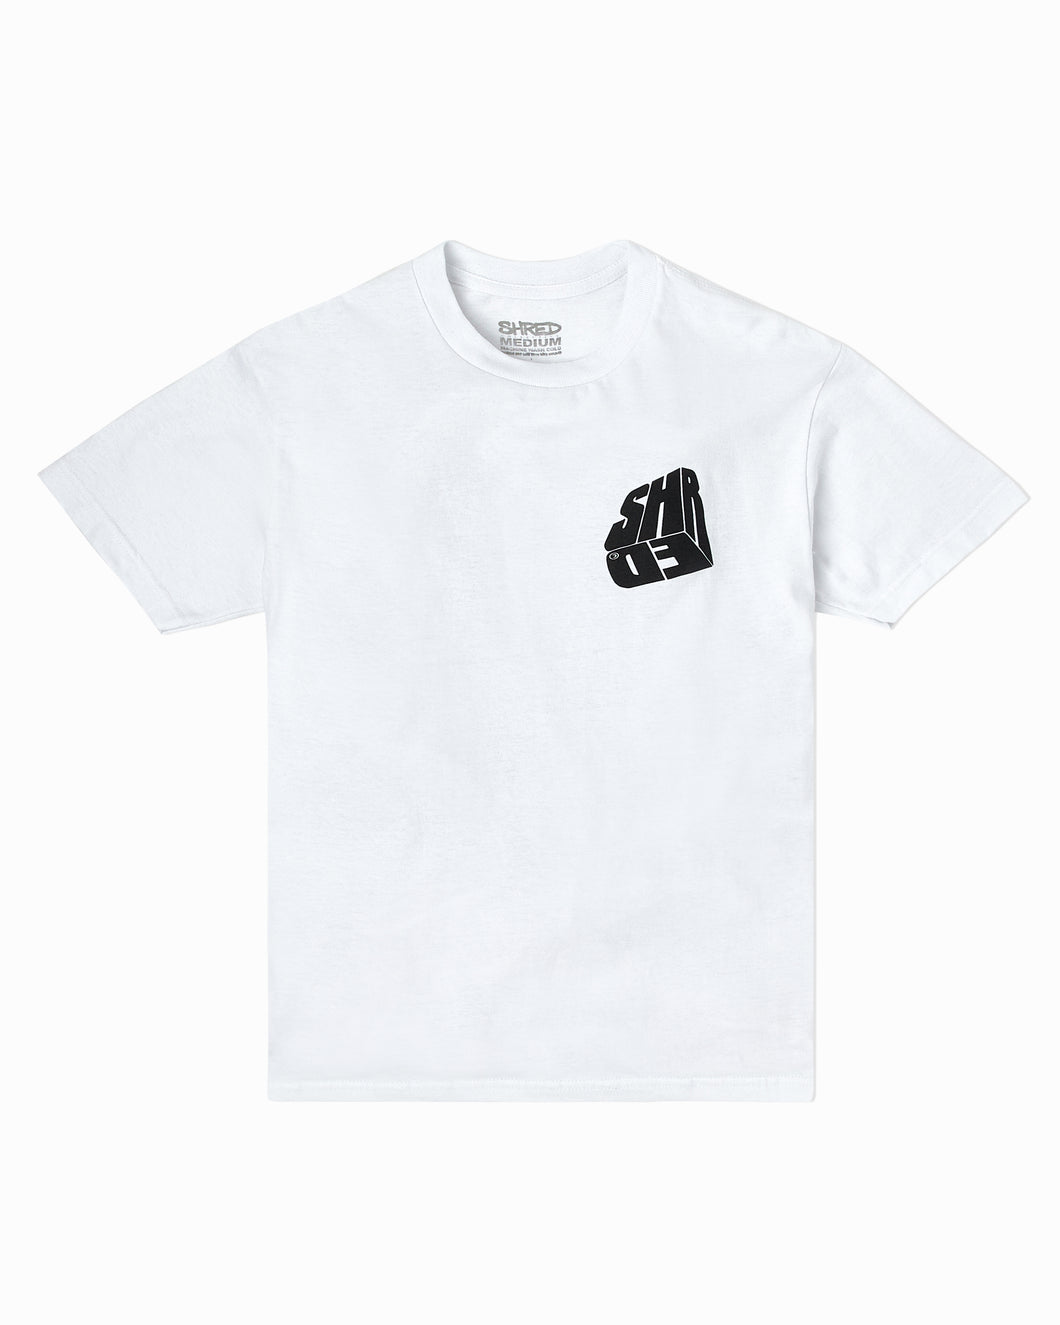 White T-Shirt, Black Shred Logo in a Box